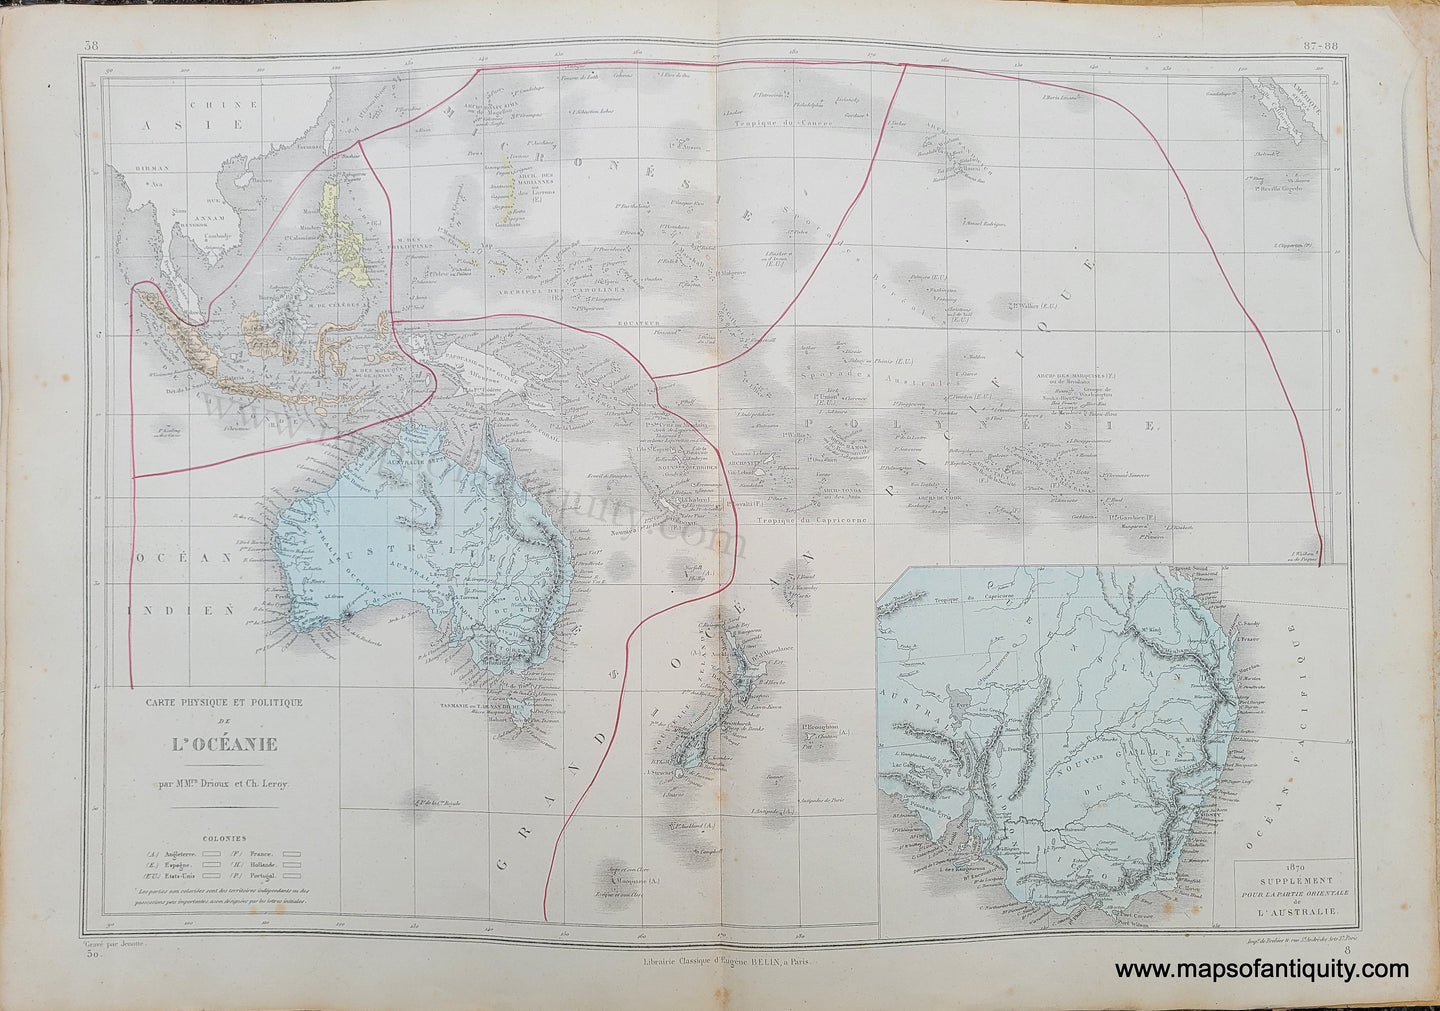 Genuine-Antique-Map-Carte-Physique-et-Politique-de-l'Oceanie---Physical-and-Political-Map-of-Oceania-1875-Drioux-&-Leroy-OCE152-Maps-Of-Antiquity